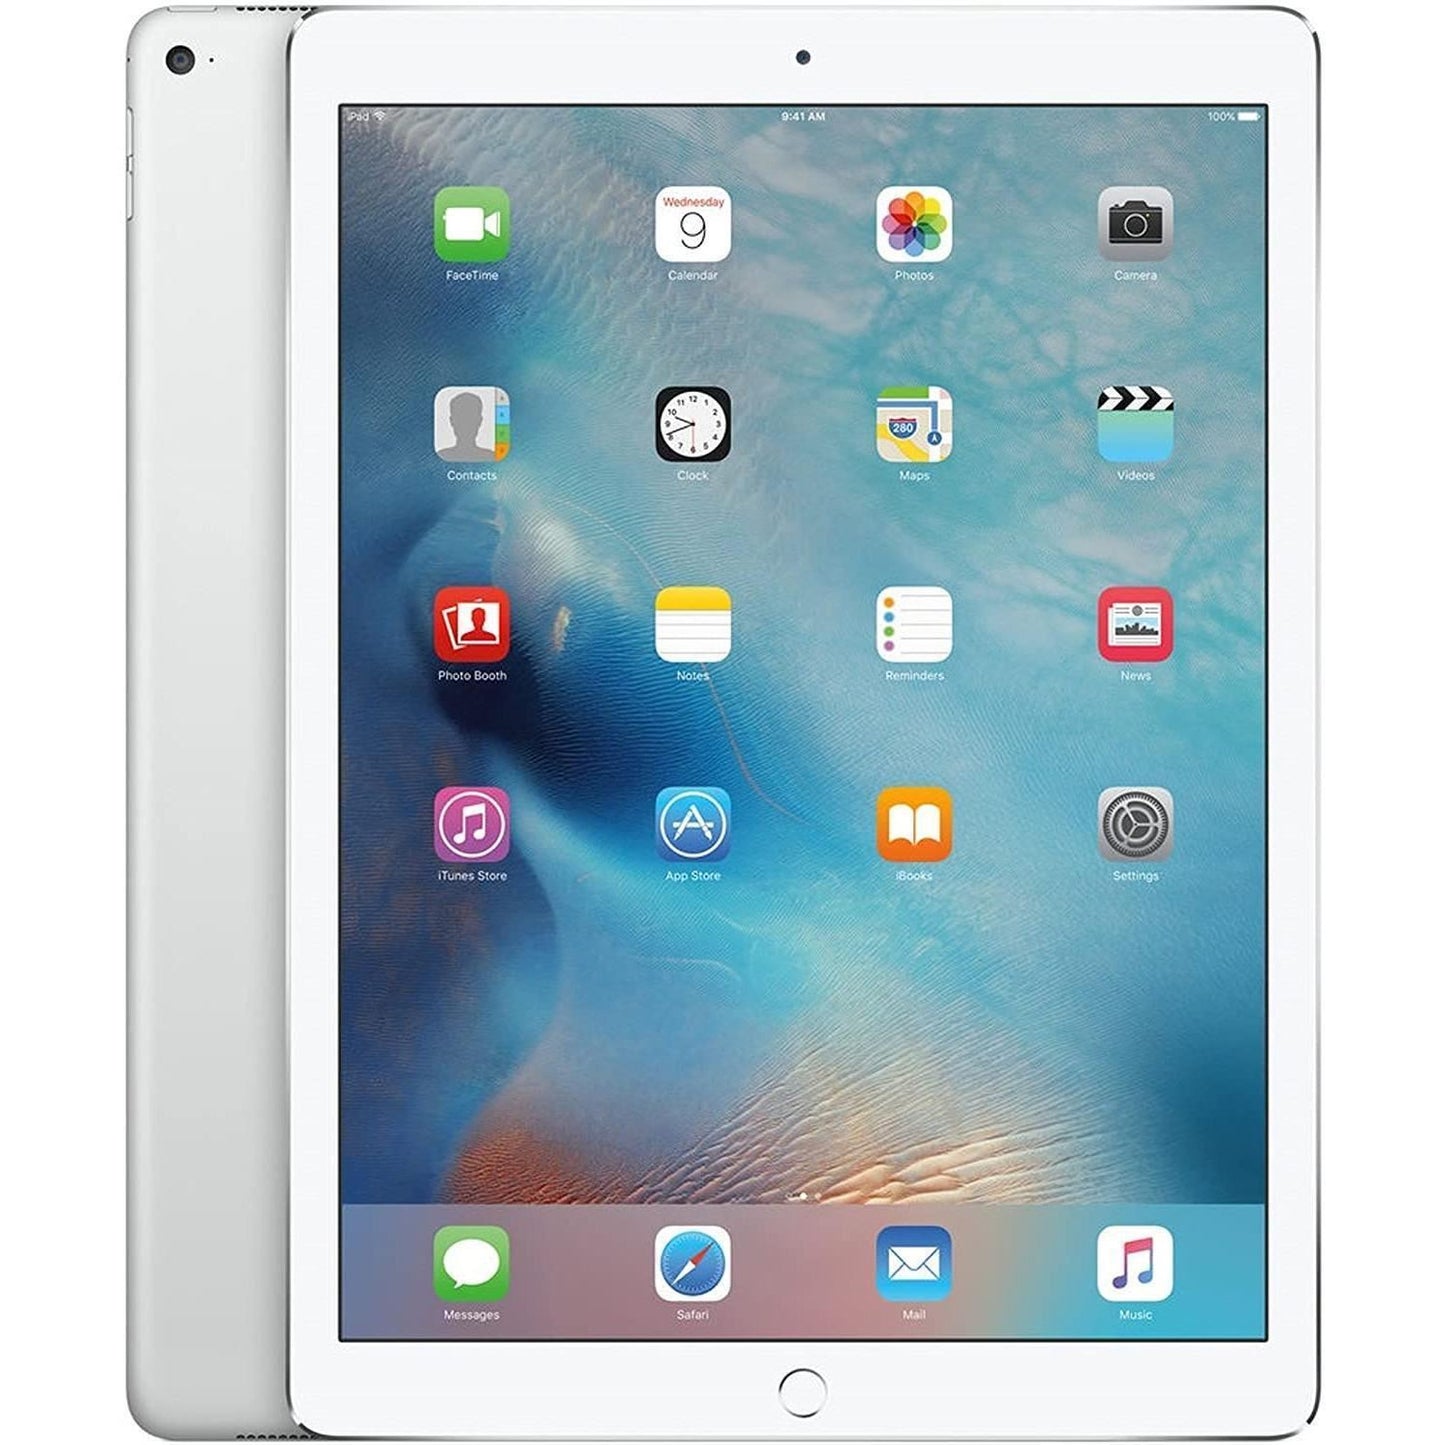 Apple iPad Pro 12.9 1st Gen Wi-Fi + 4G Tablet Unlocked iOS